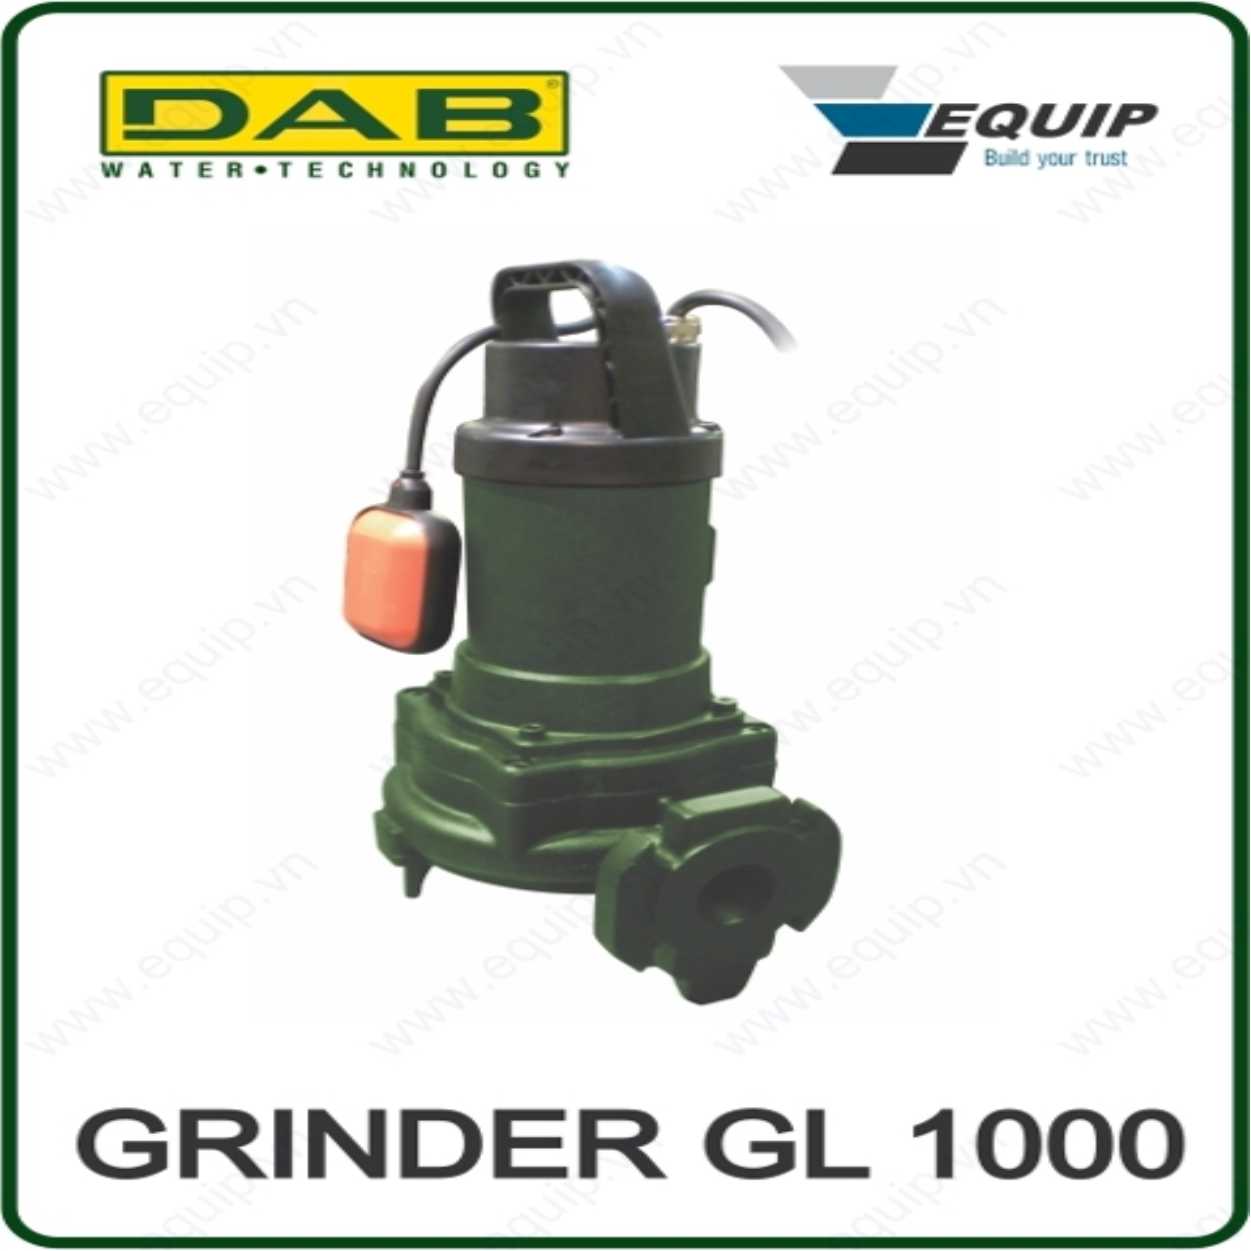 Waste water pumps with grinder